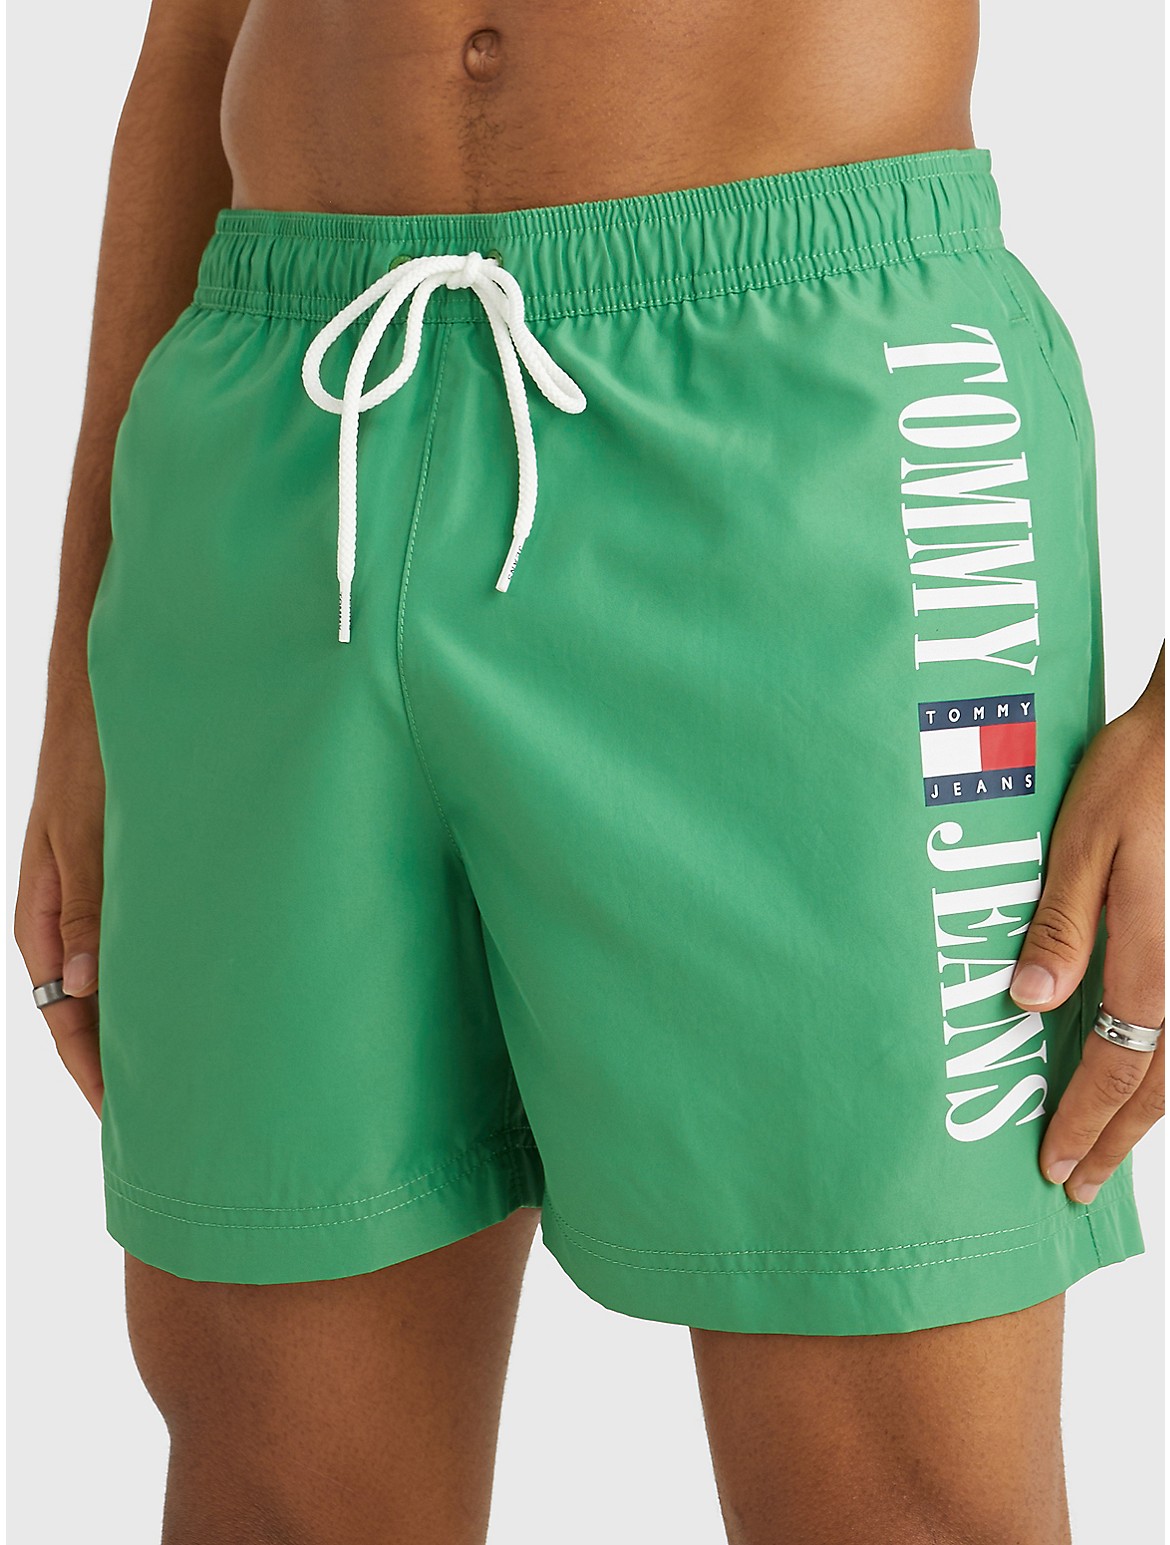 Tommy Hilfiger Men's Logo Print 7" Swim Trunk - Green - XL